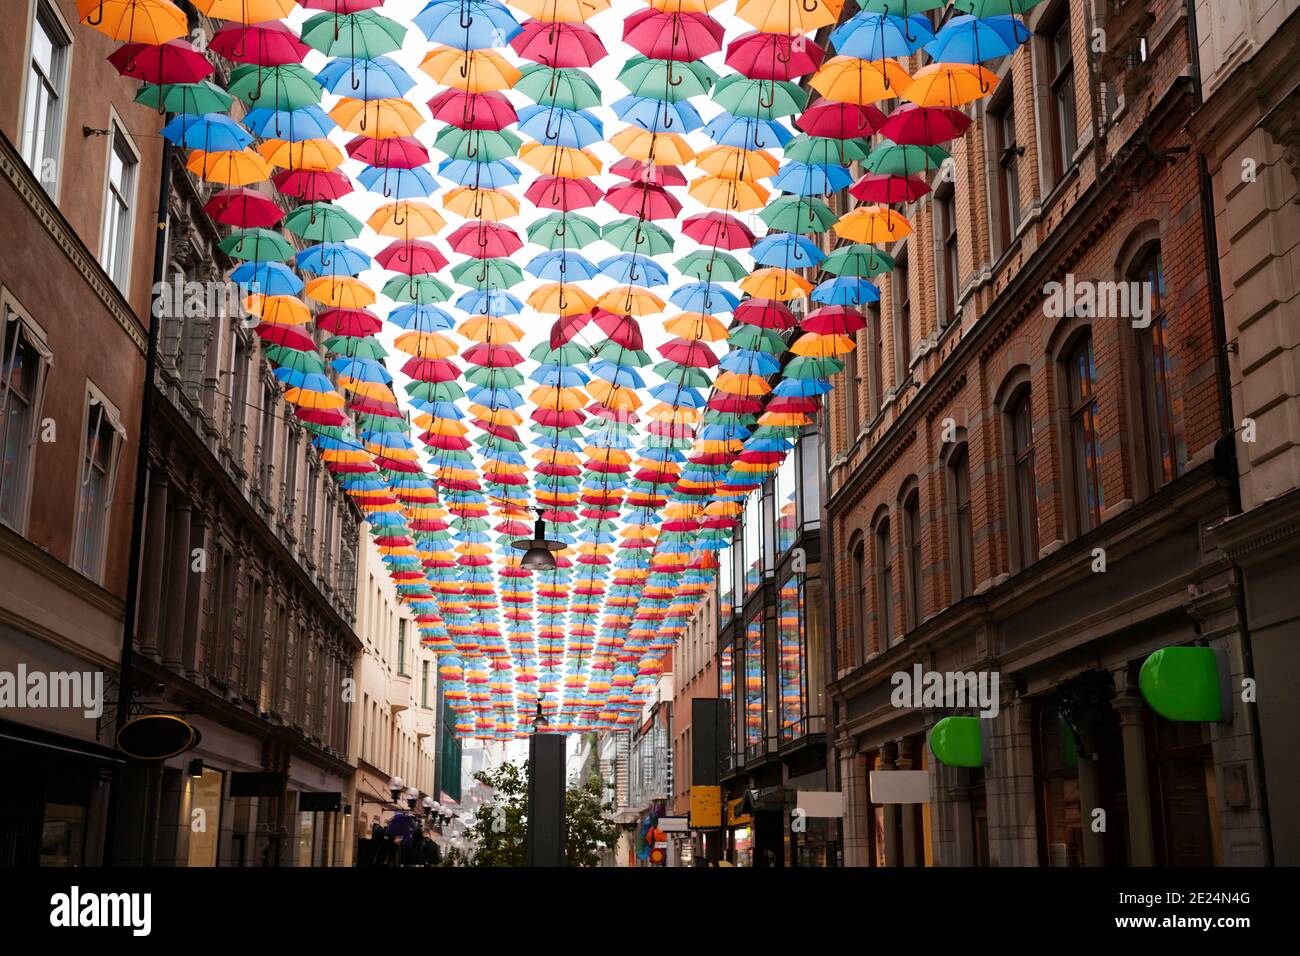 Colorful umbrellas above street Stock Photo